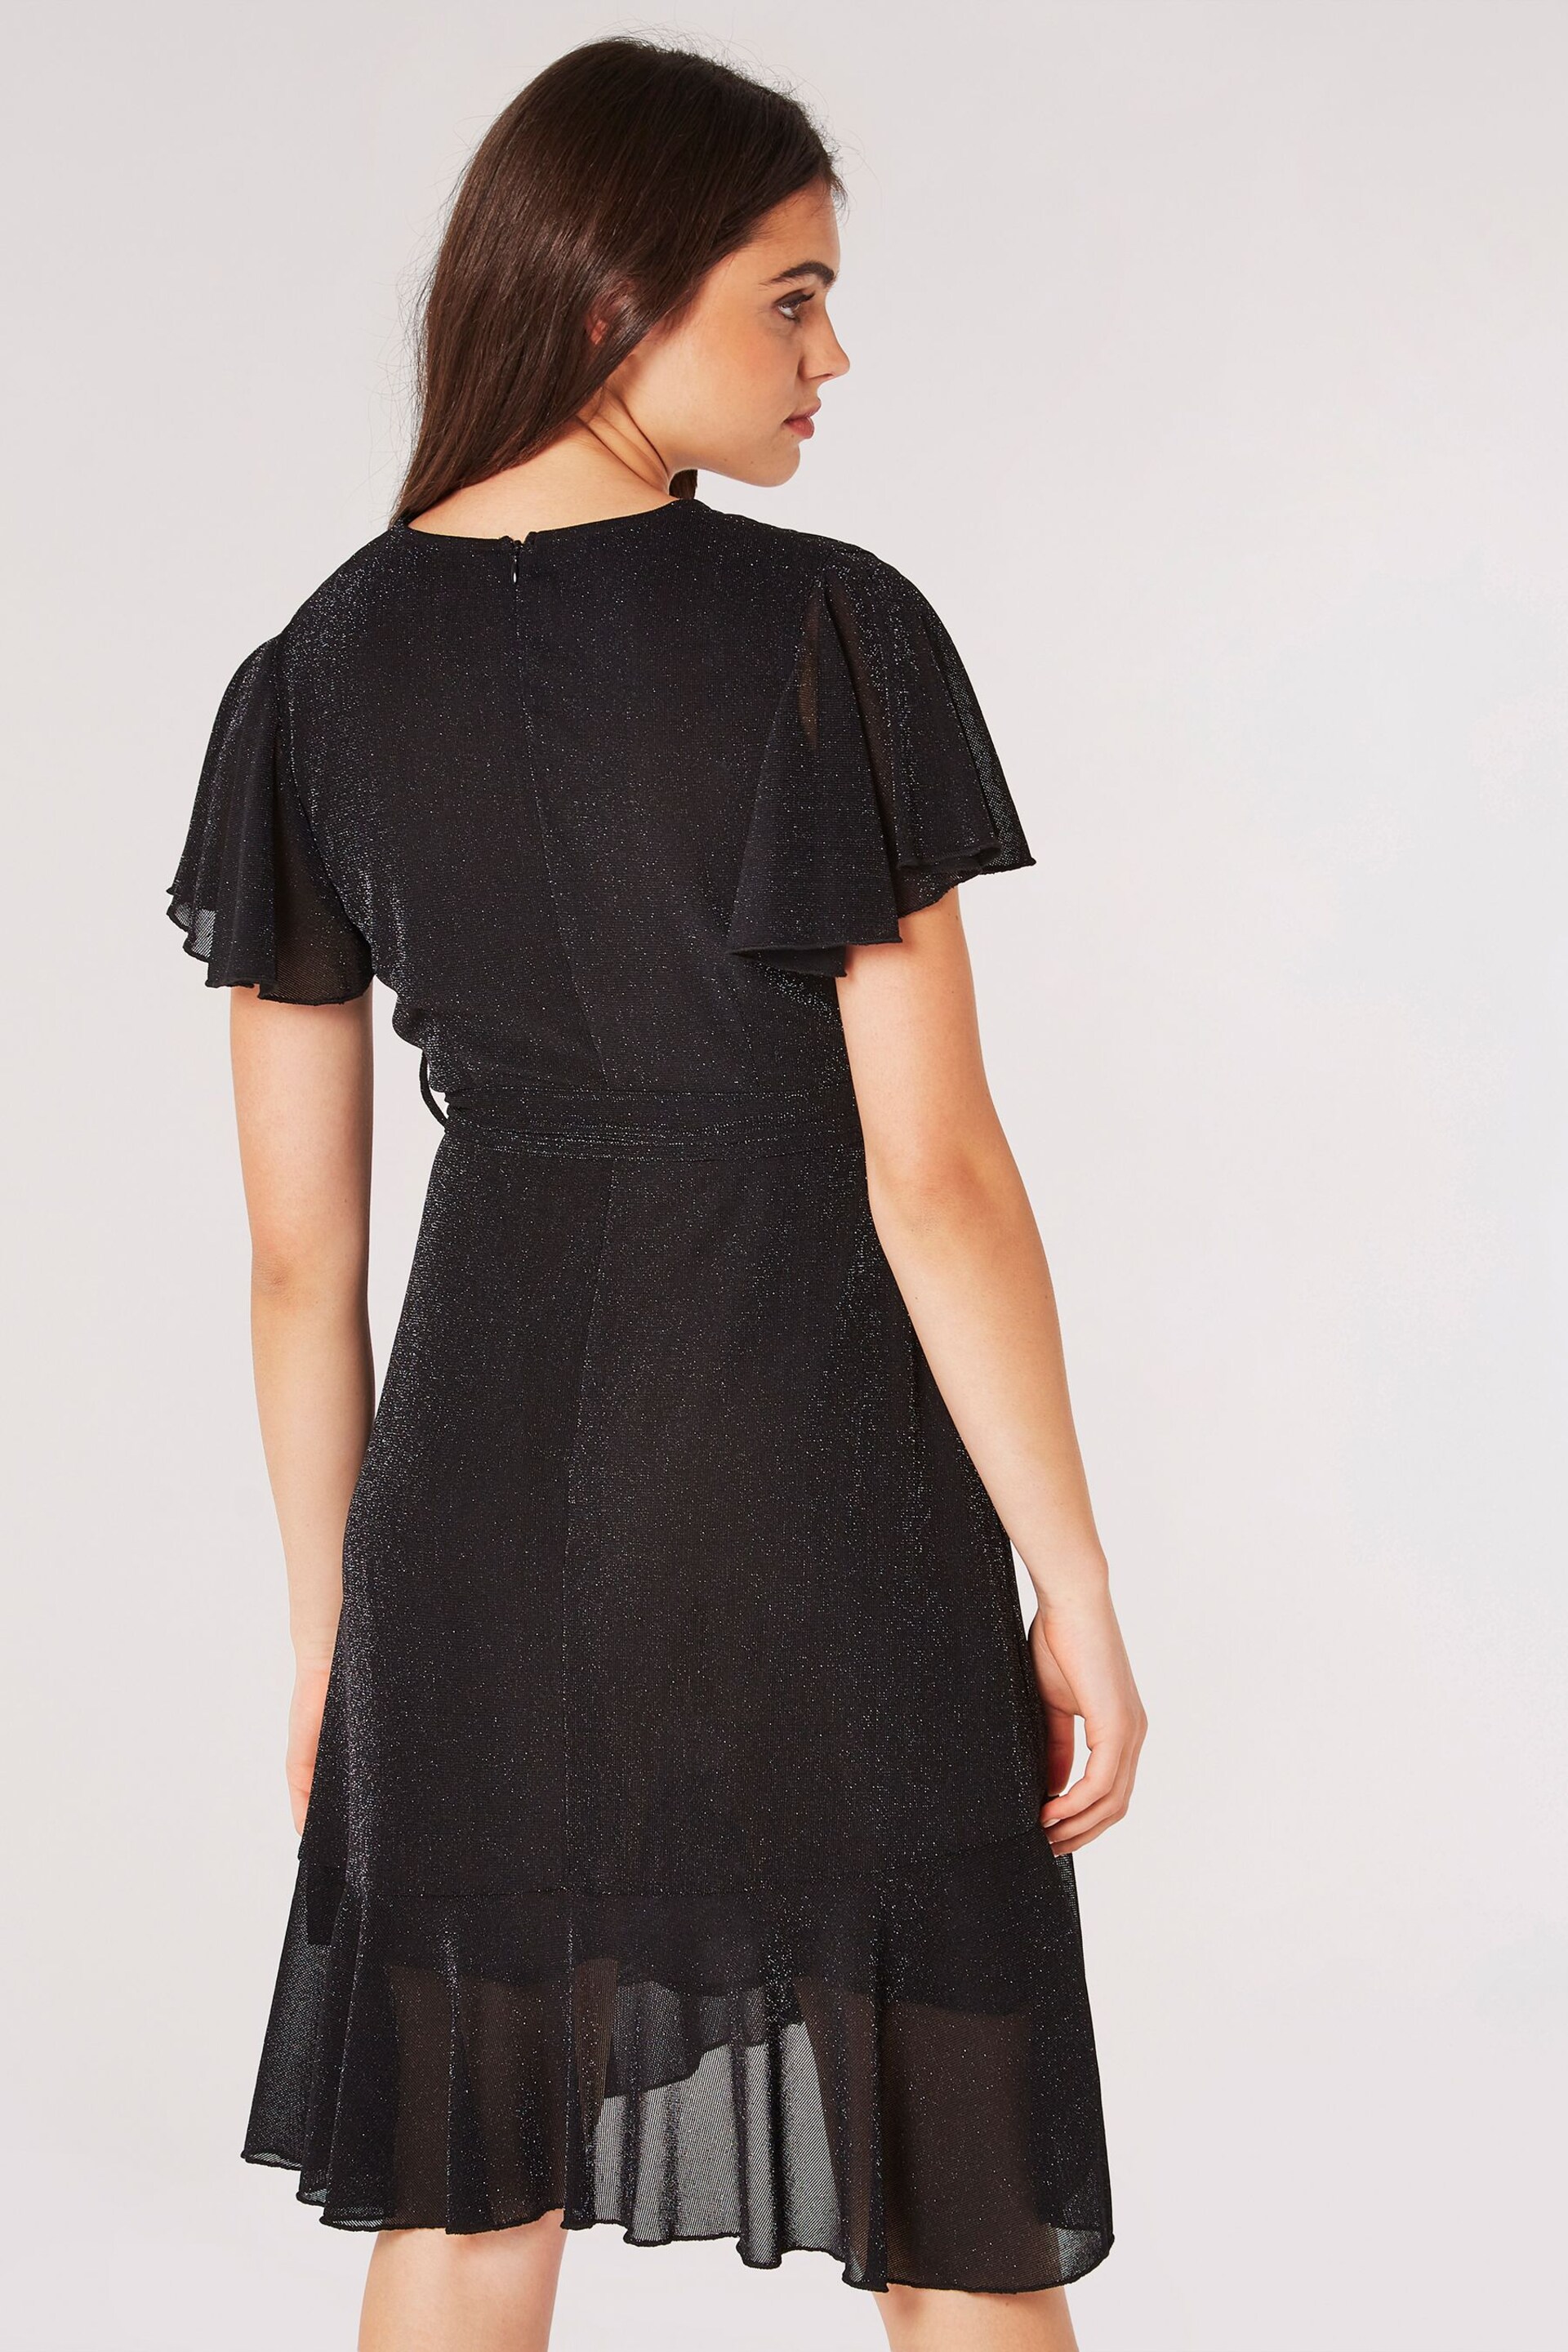 Apricot Black Angel Sleeve Wrap Sparkle Dress - Image 2 of 4